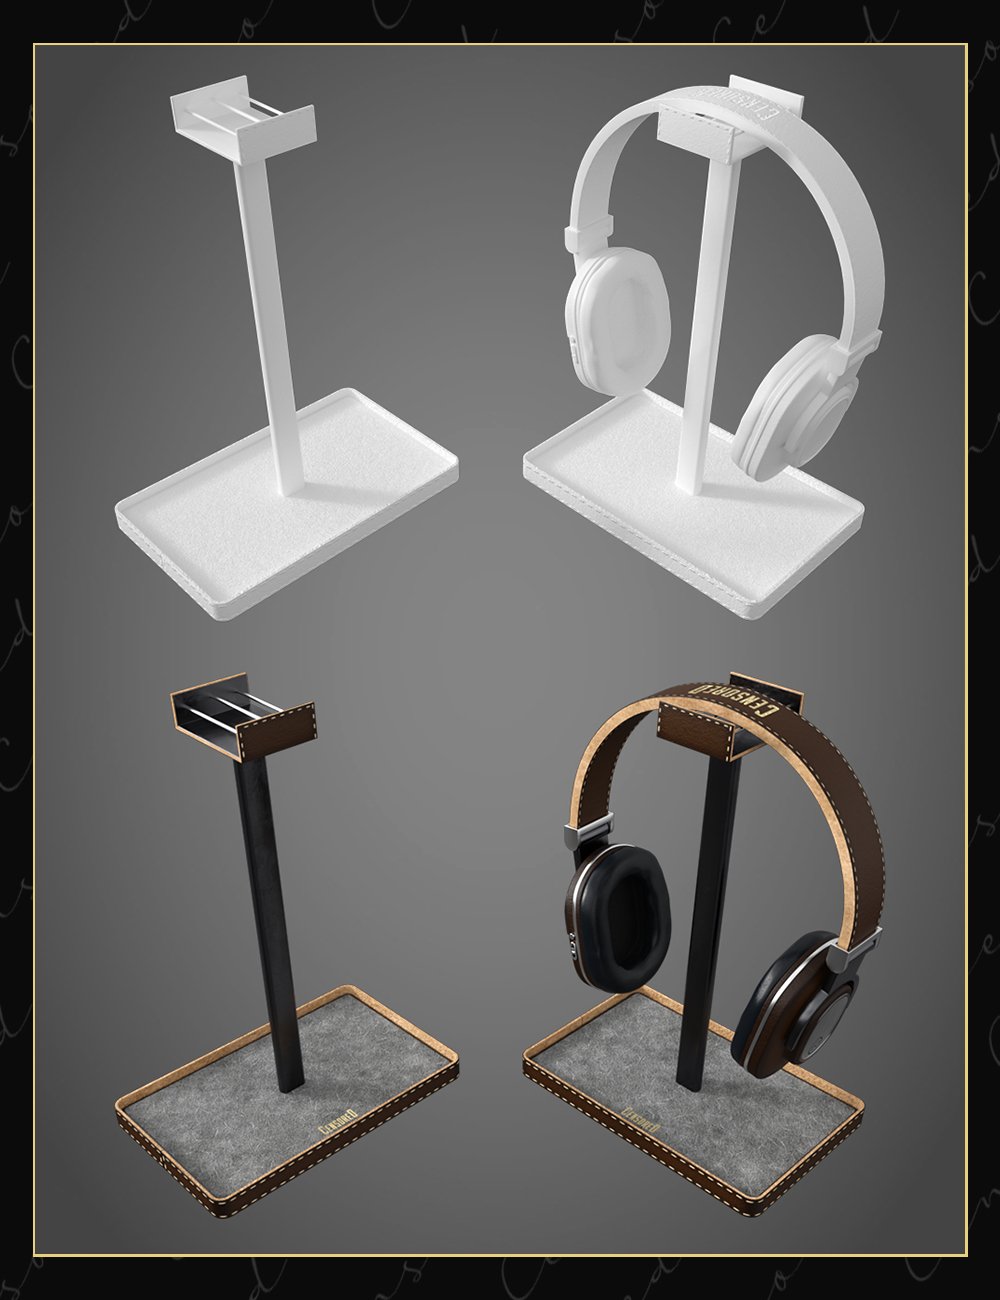 Luxury Office Desk Supplies by: Censored, 3D Models by Daz 3D